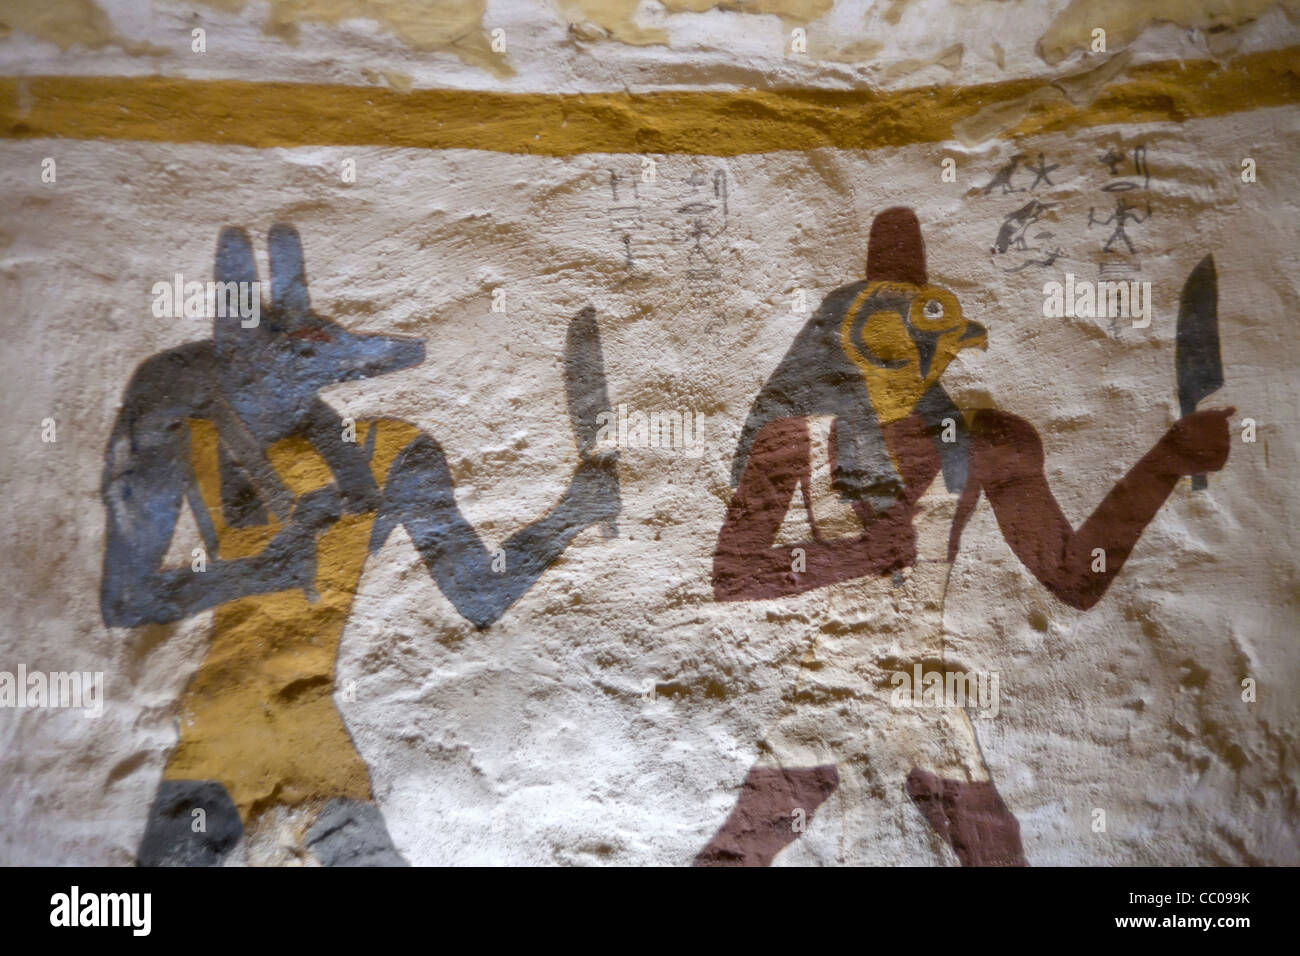 Decorated walls in The tomb of Zed Amun ef ankh sited in Qarat Qasr Salim village of Bawiti, Bahariya Oasis Egypt. Stock Photo